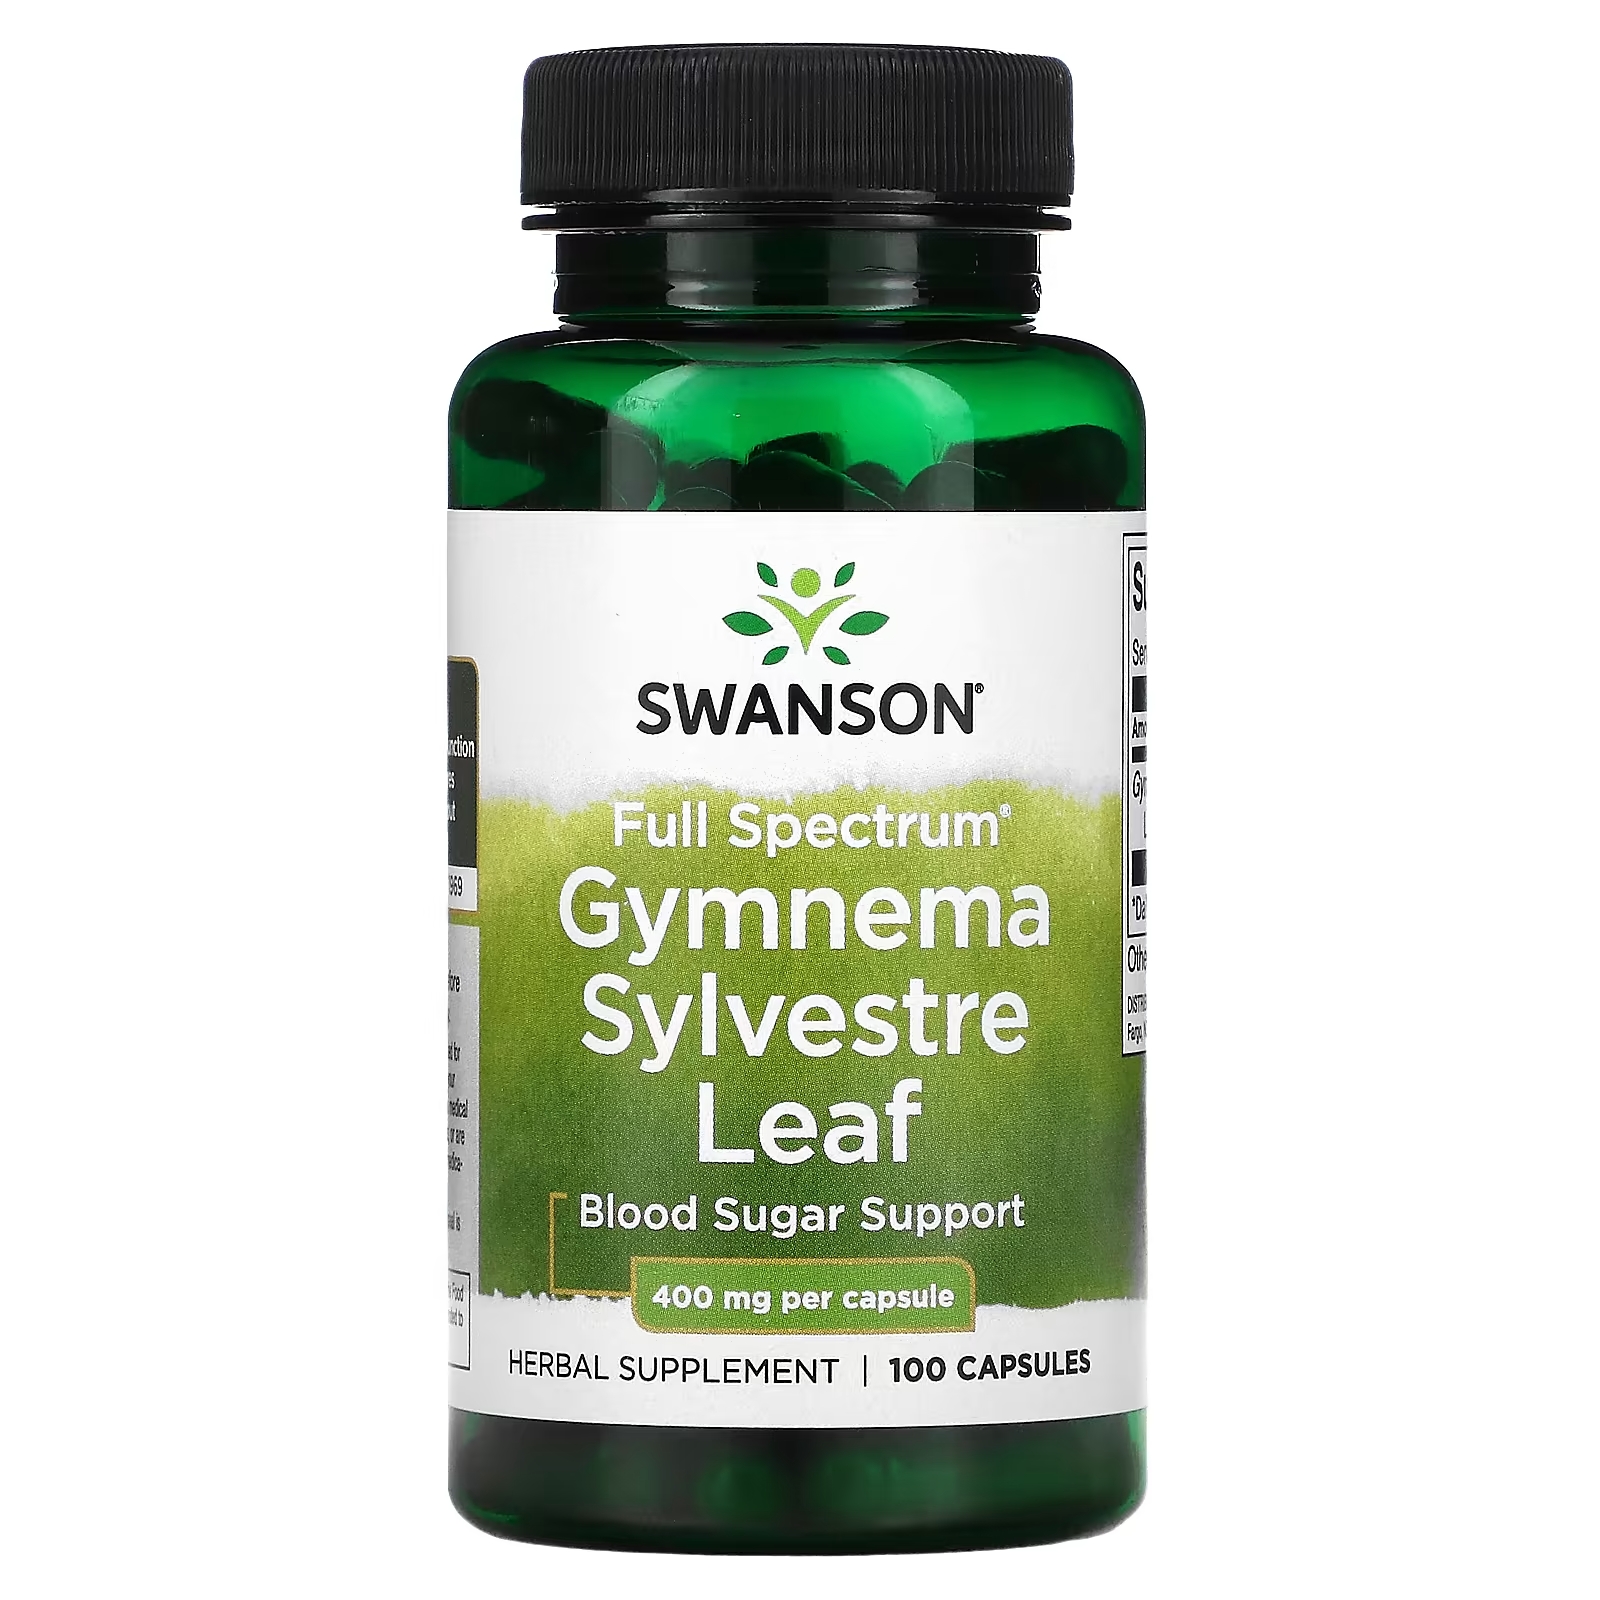 Swanson Gymnema Sylvestre Leaf полный спектр действия 400 мг, 100 капсул swanson gymnema sylvestre leaf полный спектр действия 400 мг 100 капсул